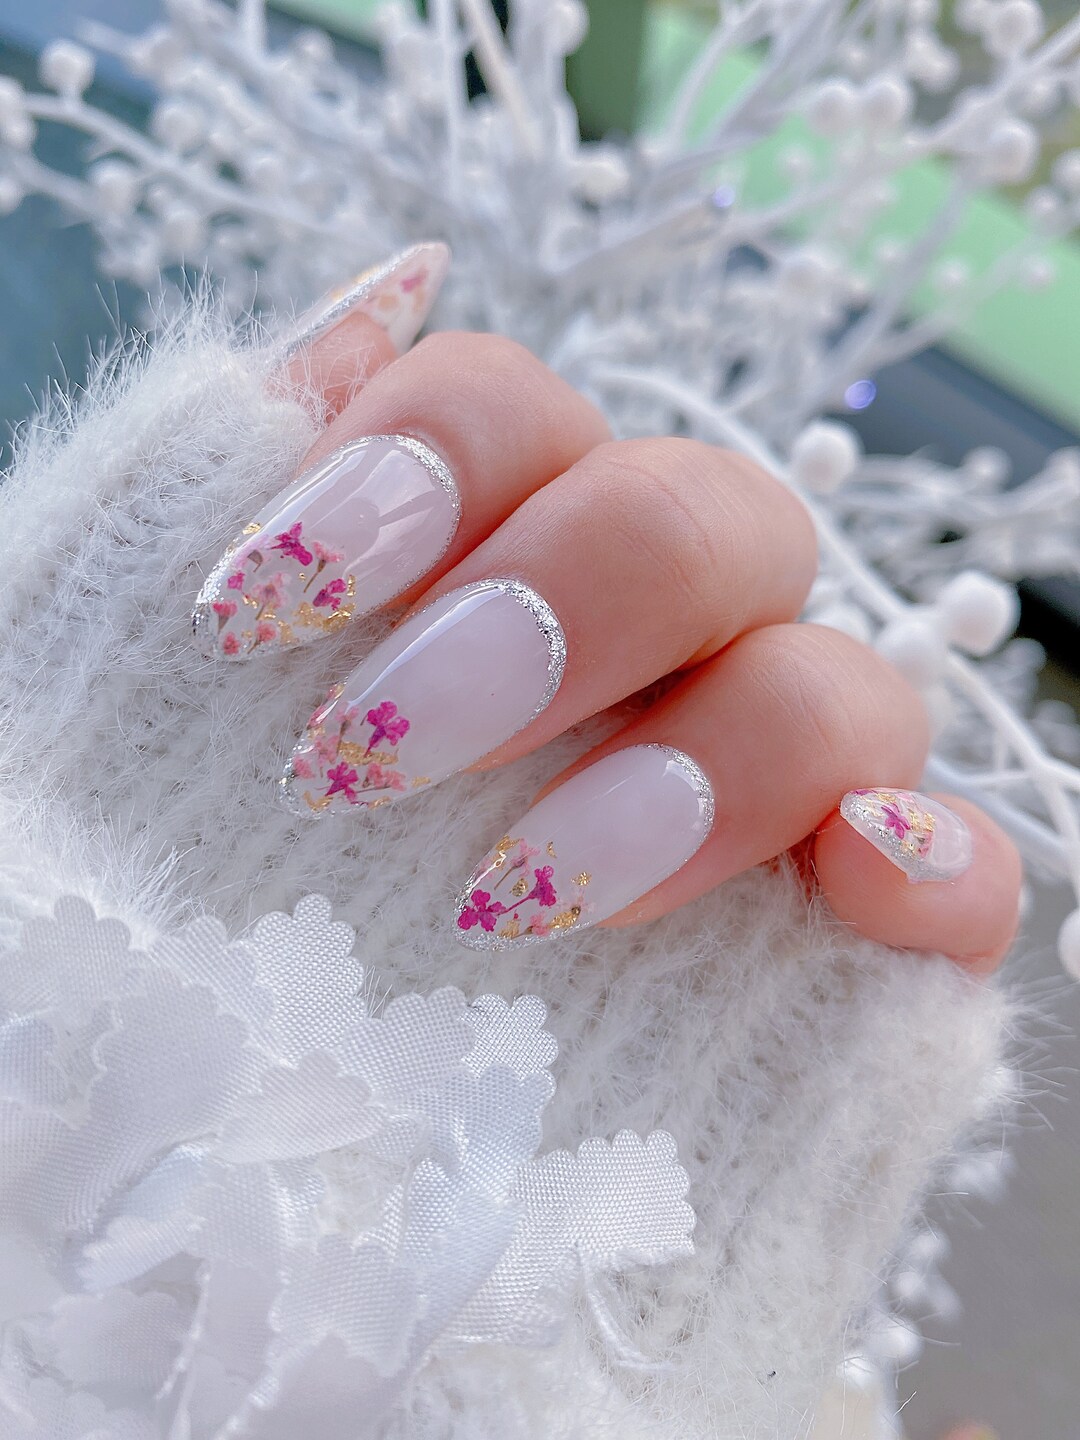 Beyond Beauty Bar - Dried flower nail designs with some gems 💎⁣ ⁣ ⁣ ⁣ ⁣ ⁣  ⁣ ⁣ ⁣ ⁣ ⁣ ⁣ ⁣ ⁣ #naildesign #acrylicnails #acrylic #nailgems #naildiamonds  #pinknails #nailart #nails #driedflowers